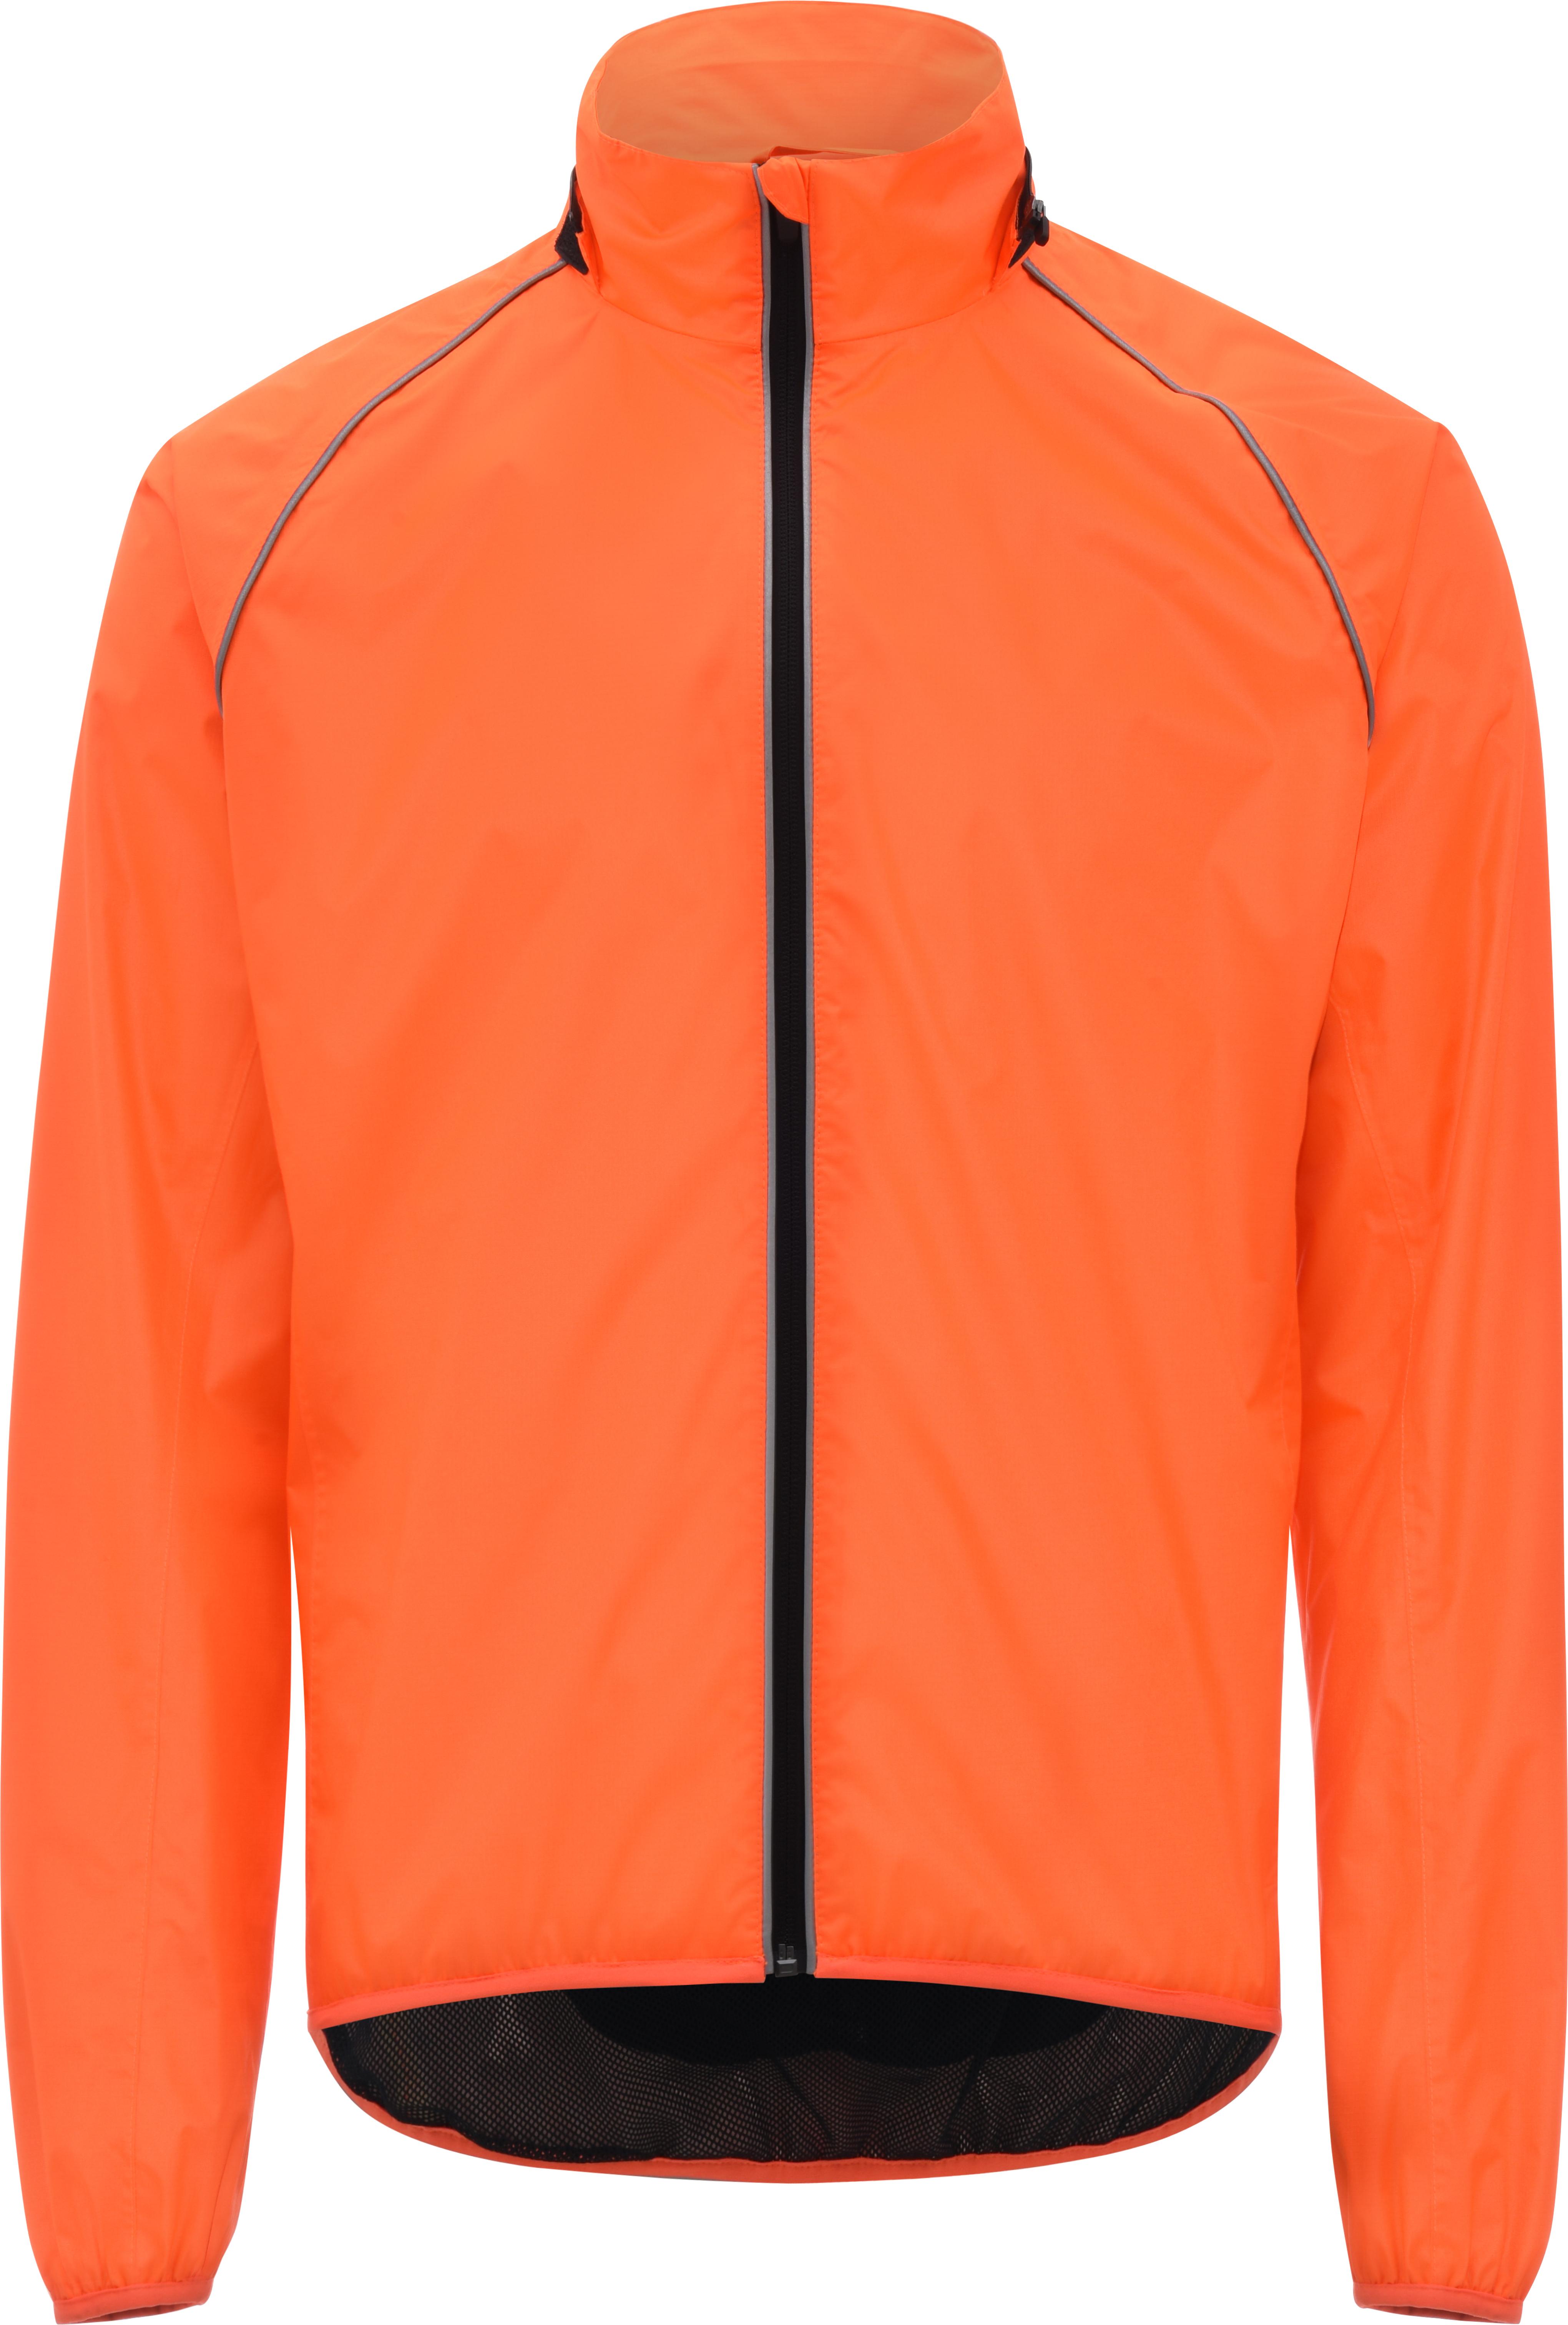 Ridge Unisex Waterproof Jacket - Fluorescent Orange, L